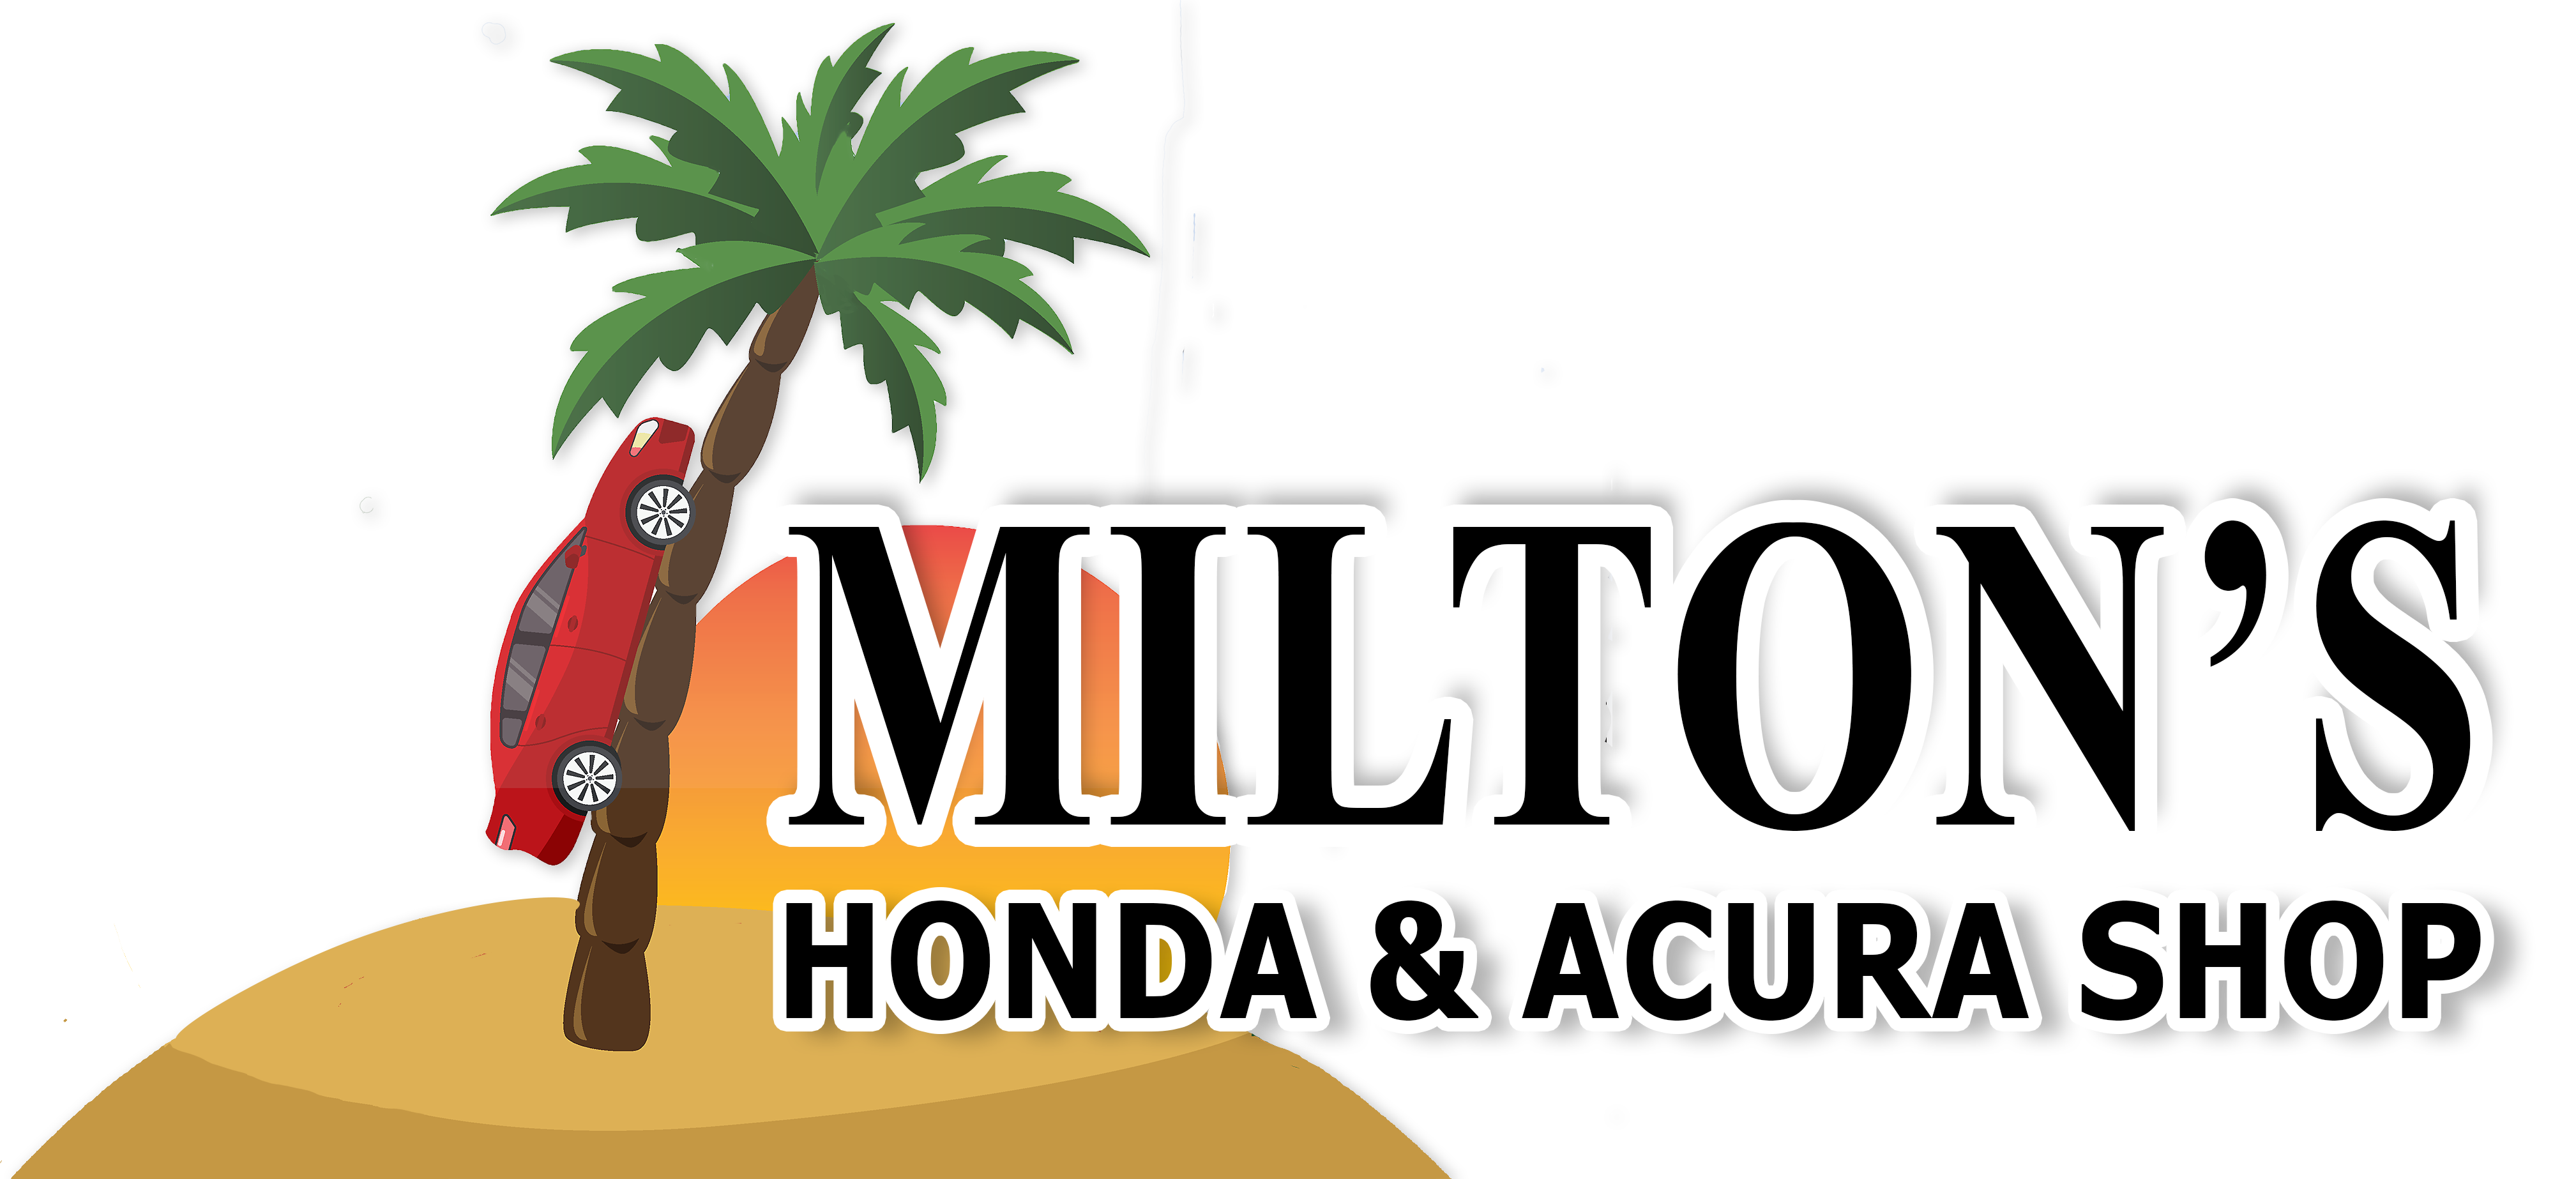 Milton's Honda & Acura Shop